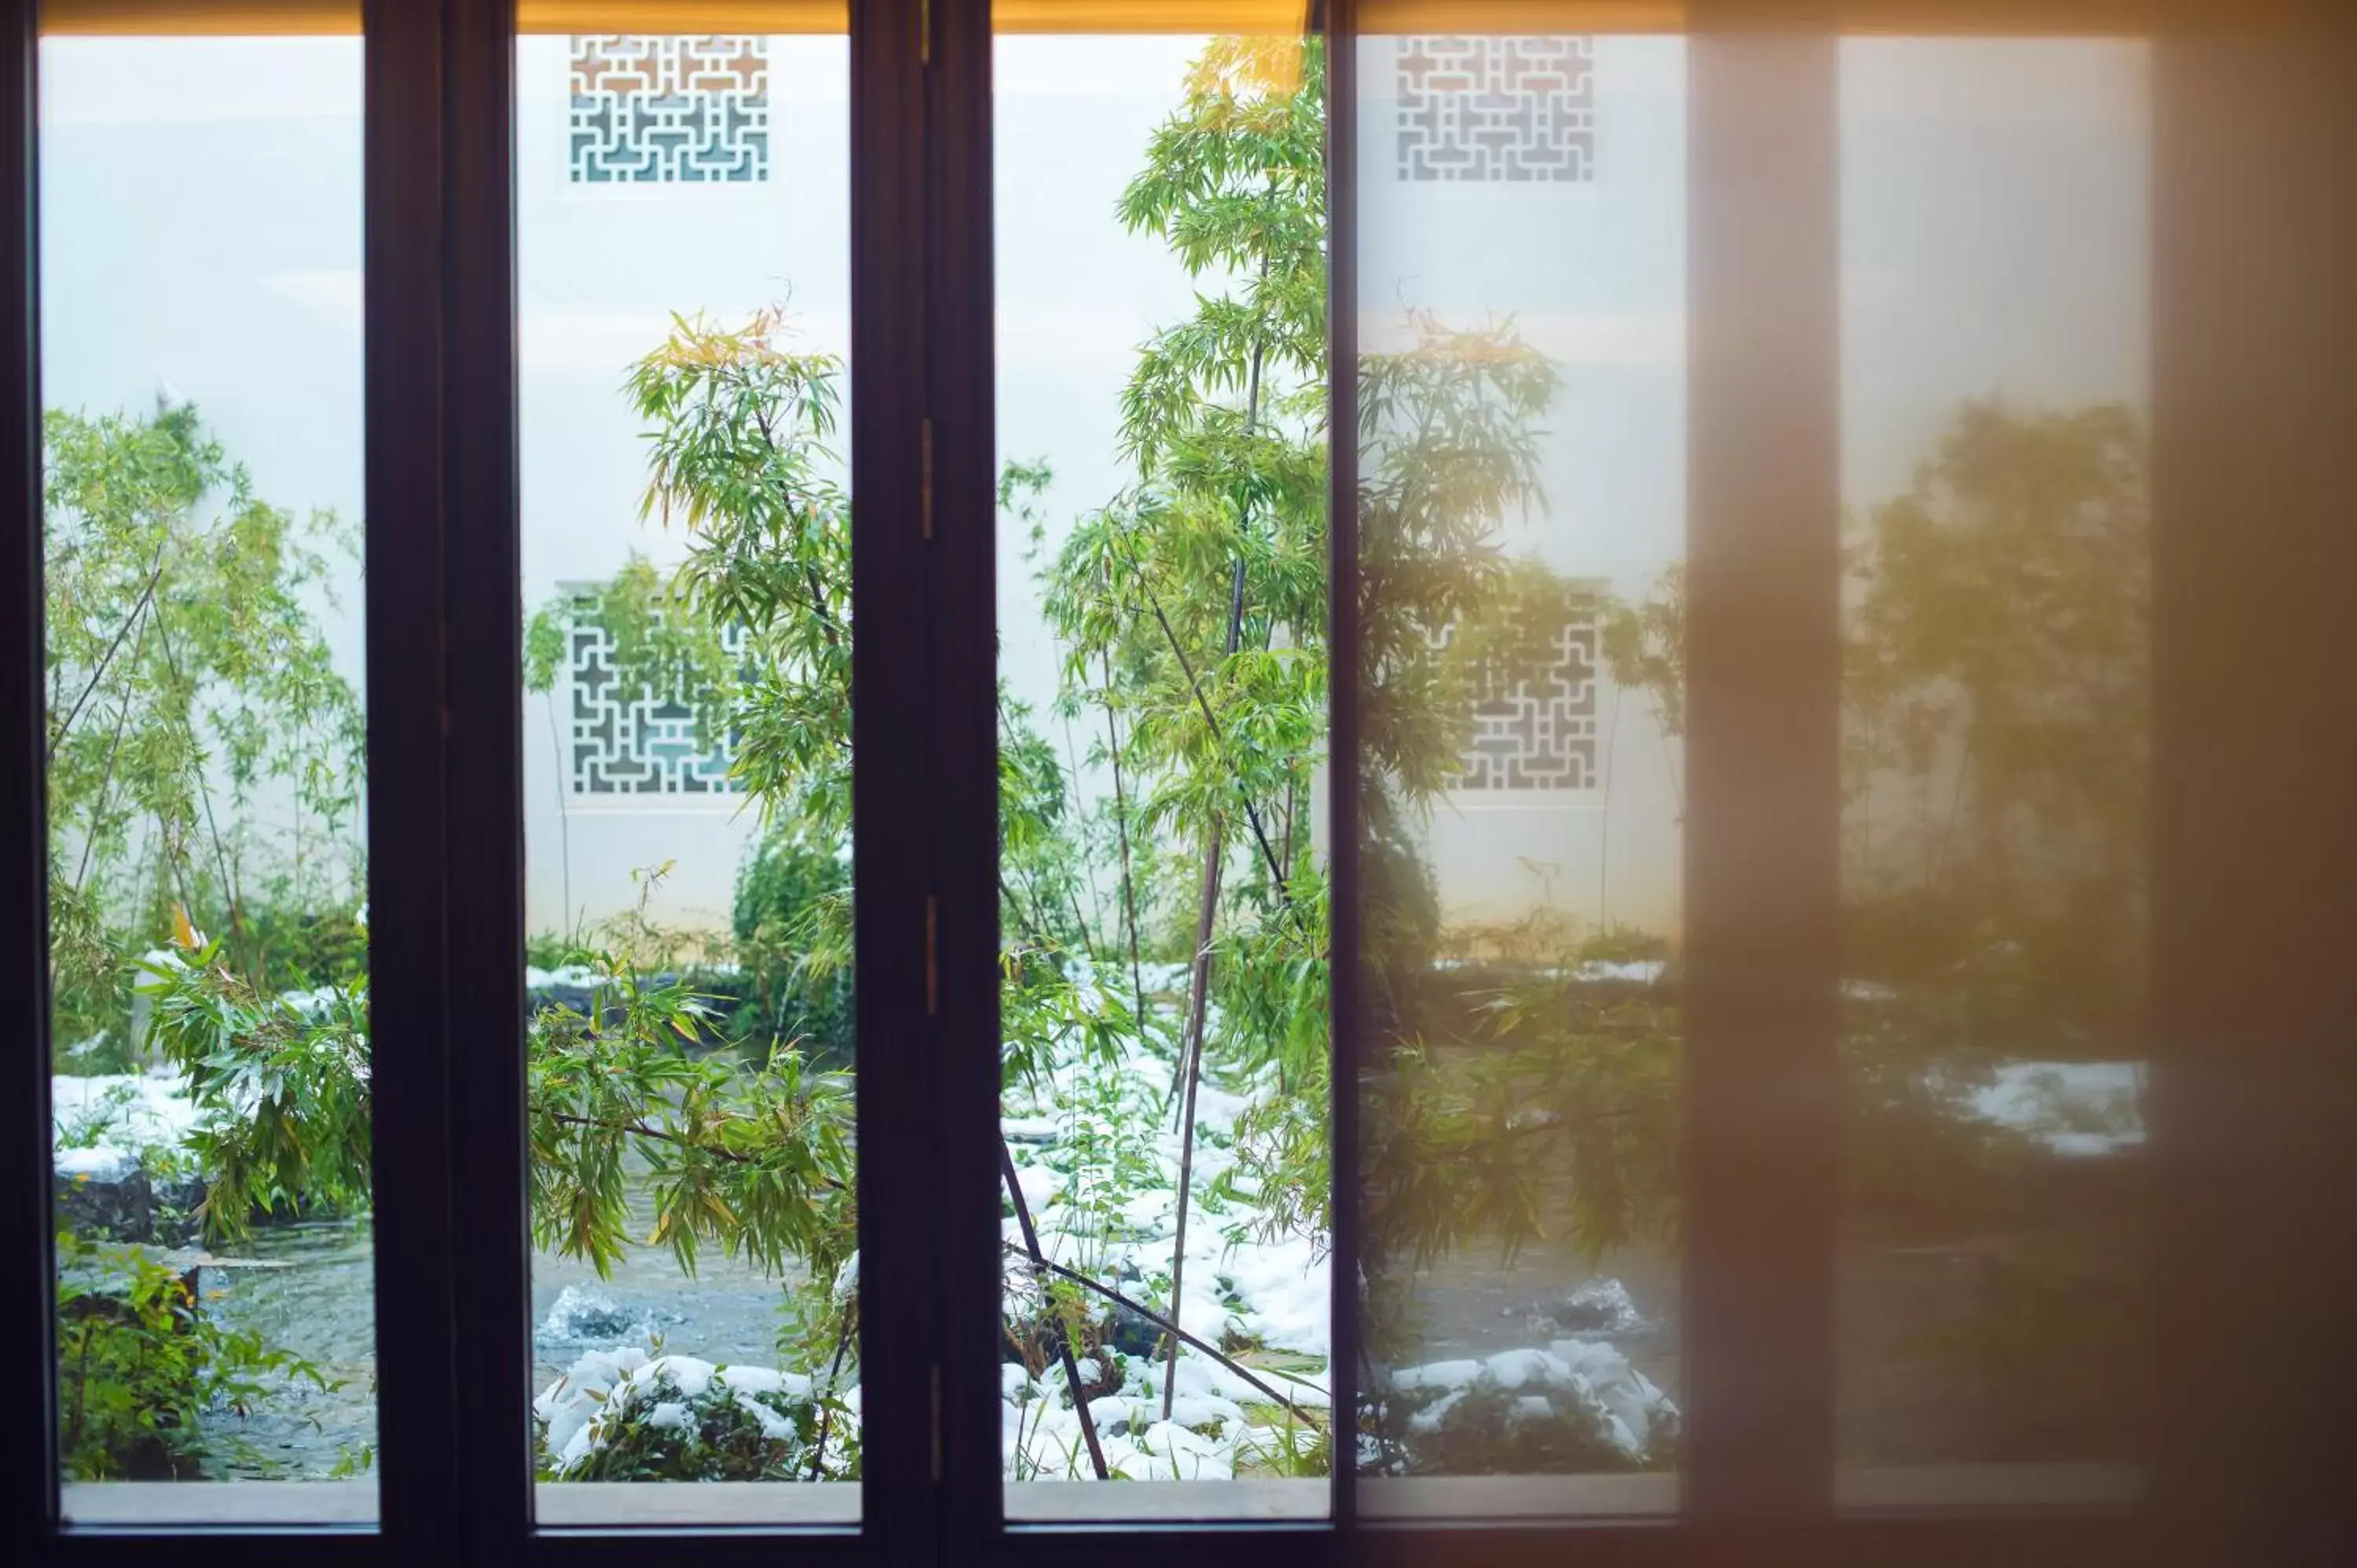 Winter in Four Seasons Hotel Hangzhou at West Lake